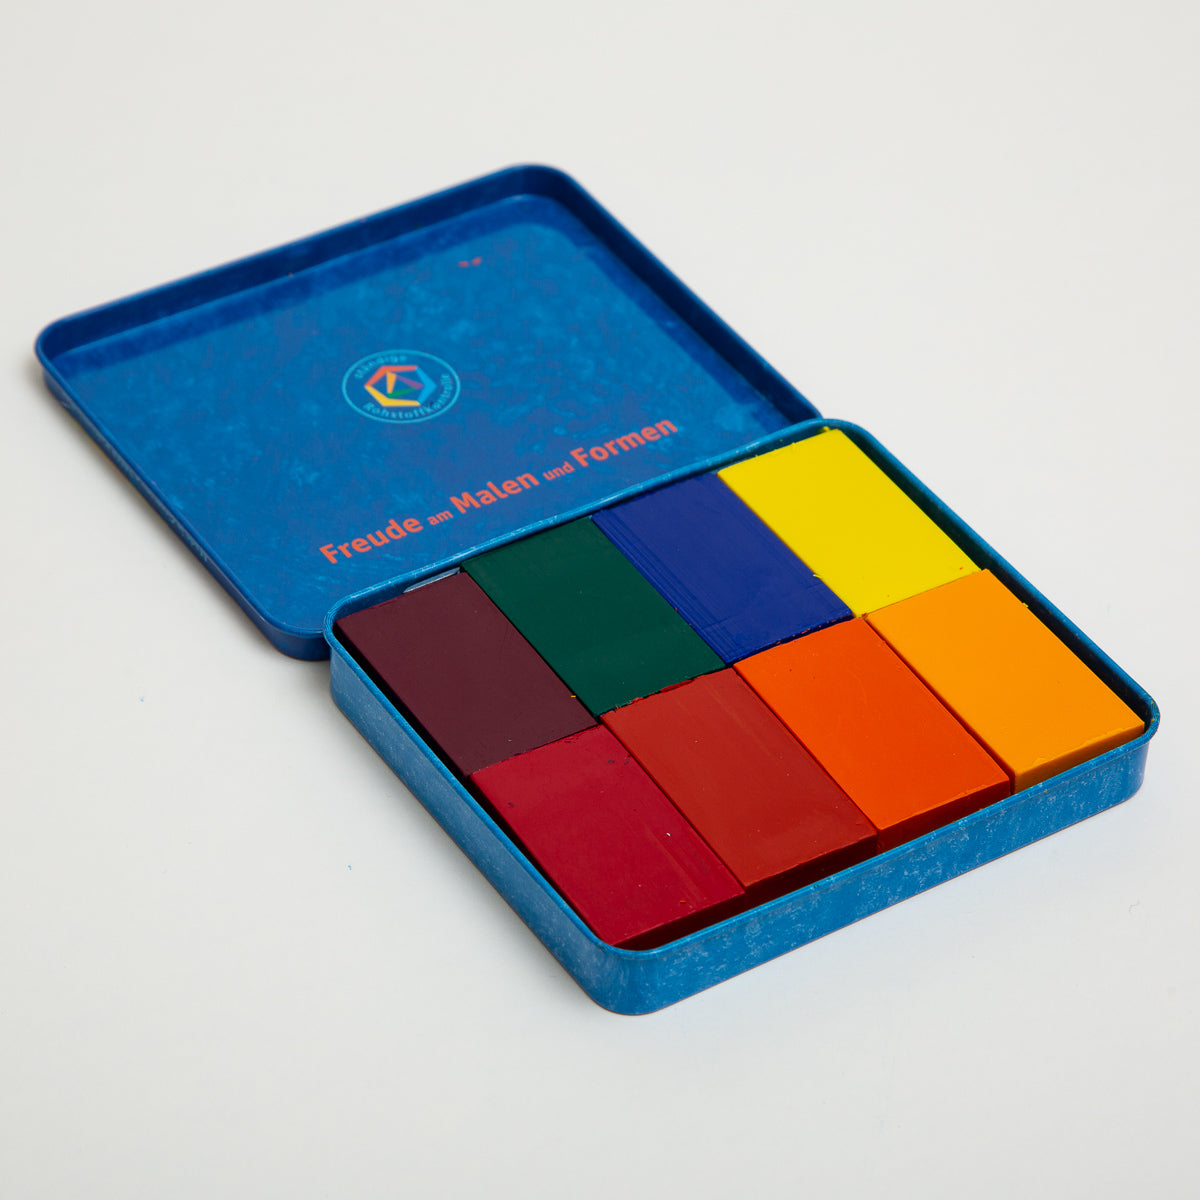 Stockmar Beeswax Block Crayons,8 Assorted Waldorf Colors in Tin